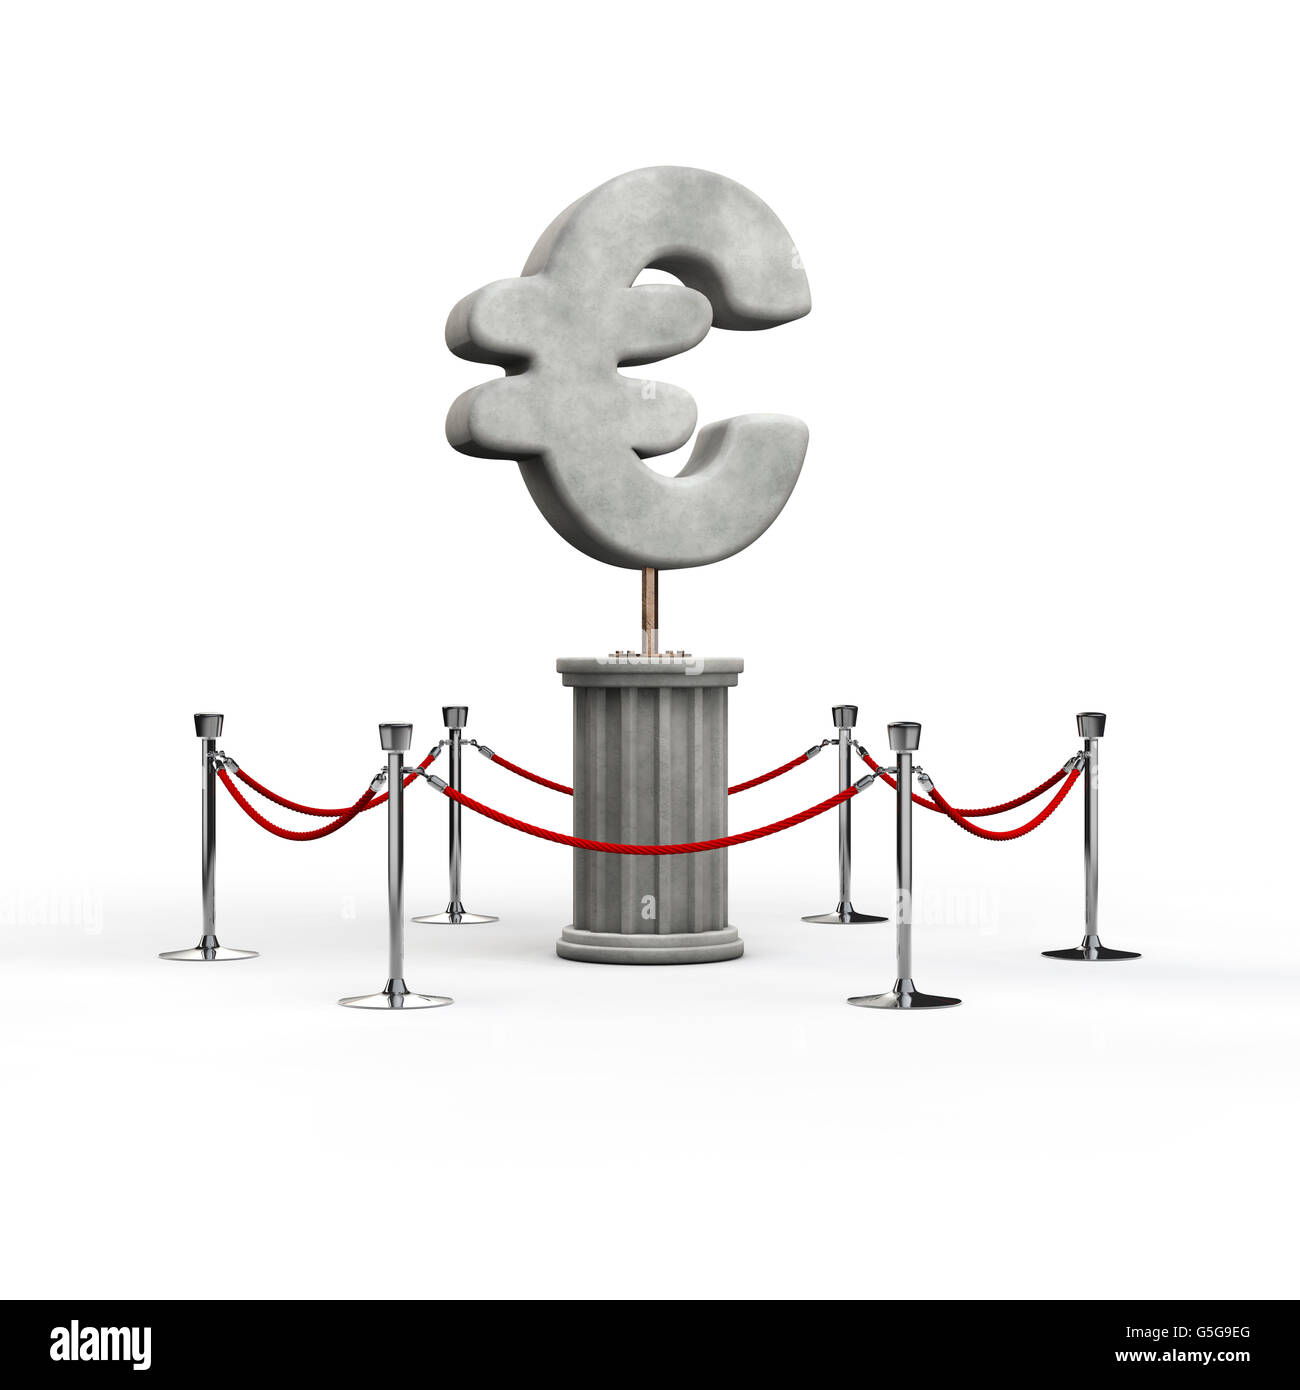 The euro exhibit / 3D illustration of euro symbol sculpture Stock Photo